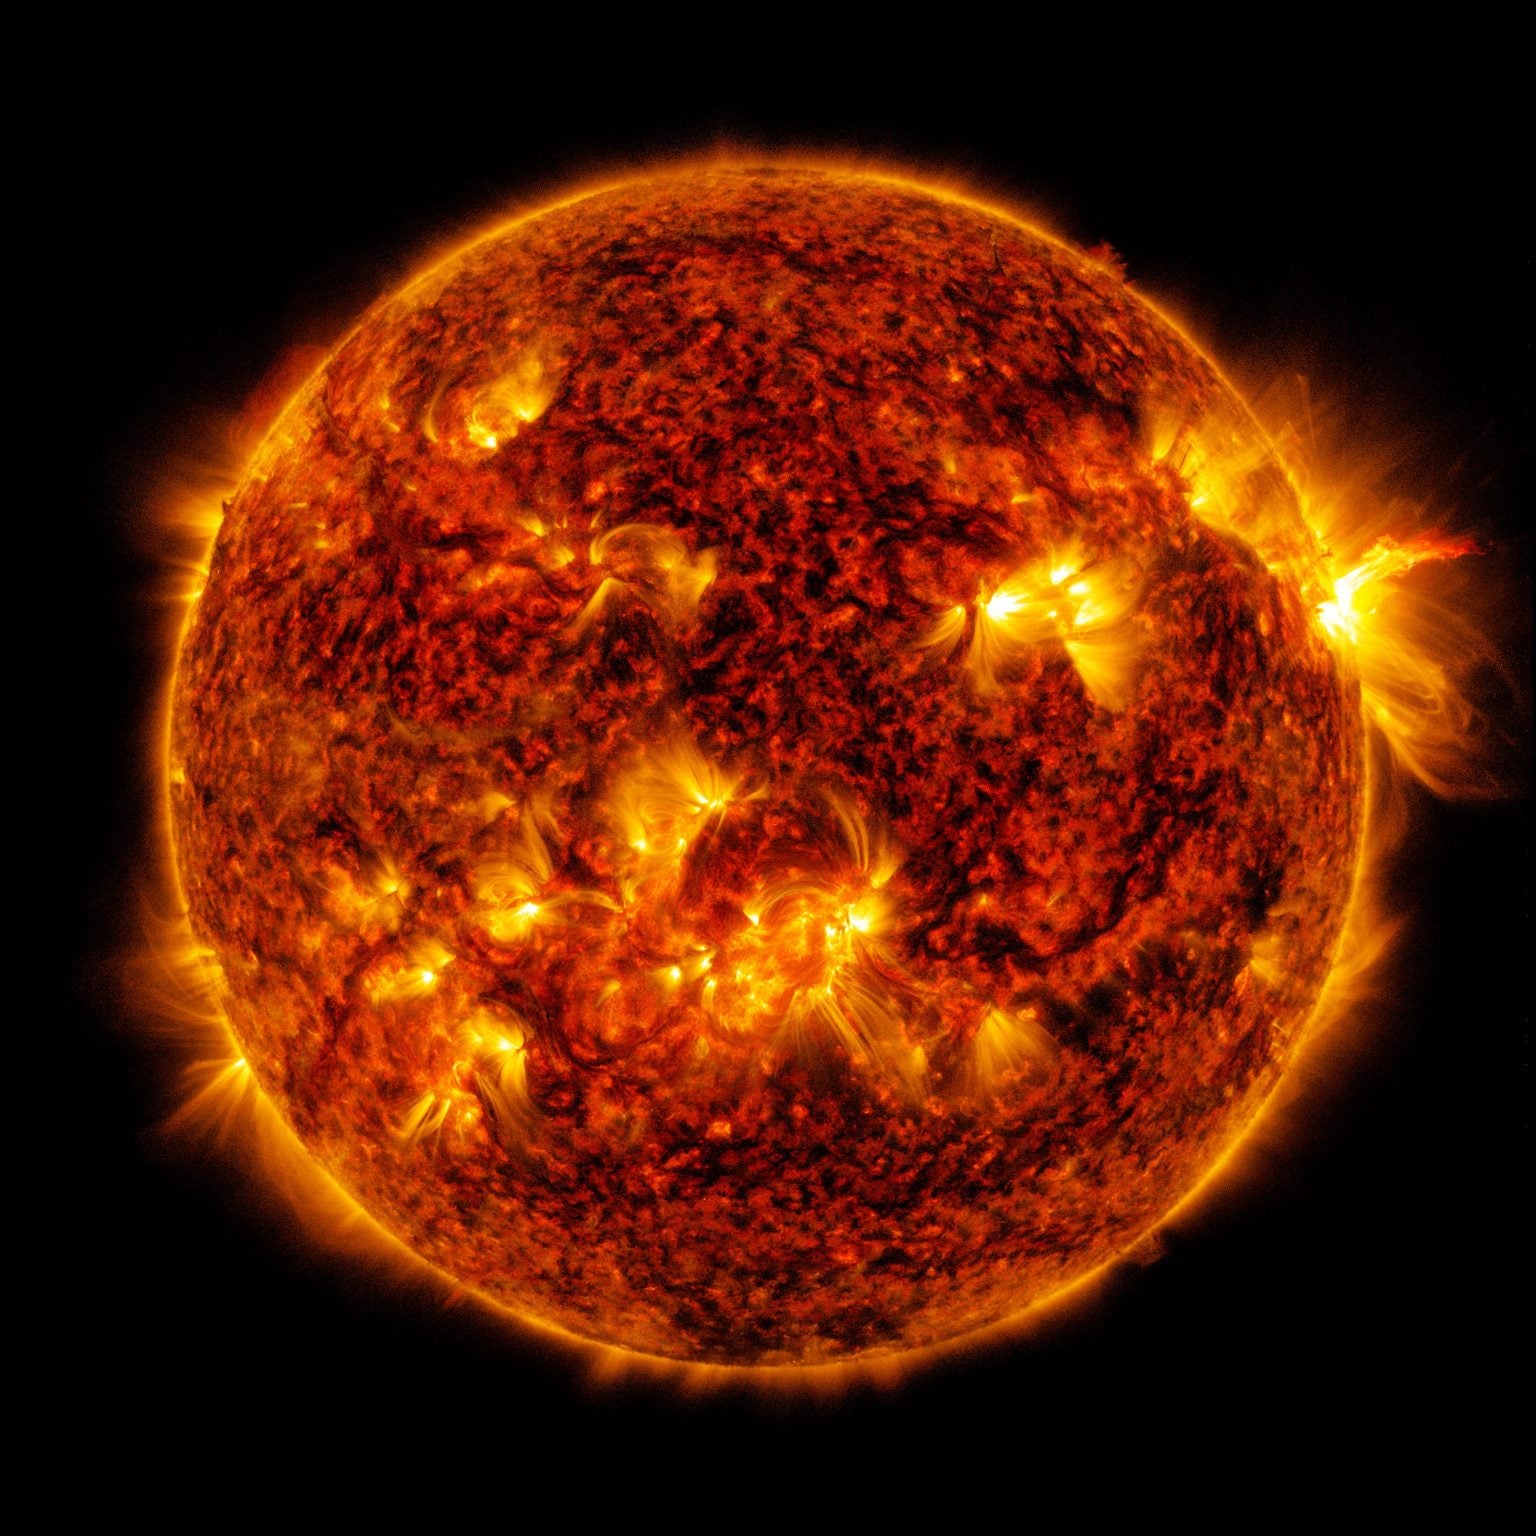 Nasa’s Solar Dynamics Observatory captured a solar flare erupting on the Sun on 30 April